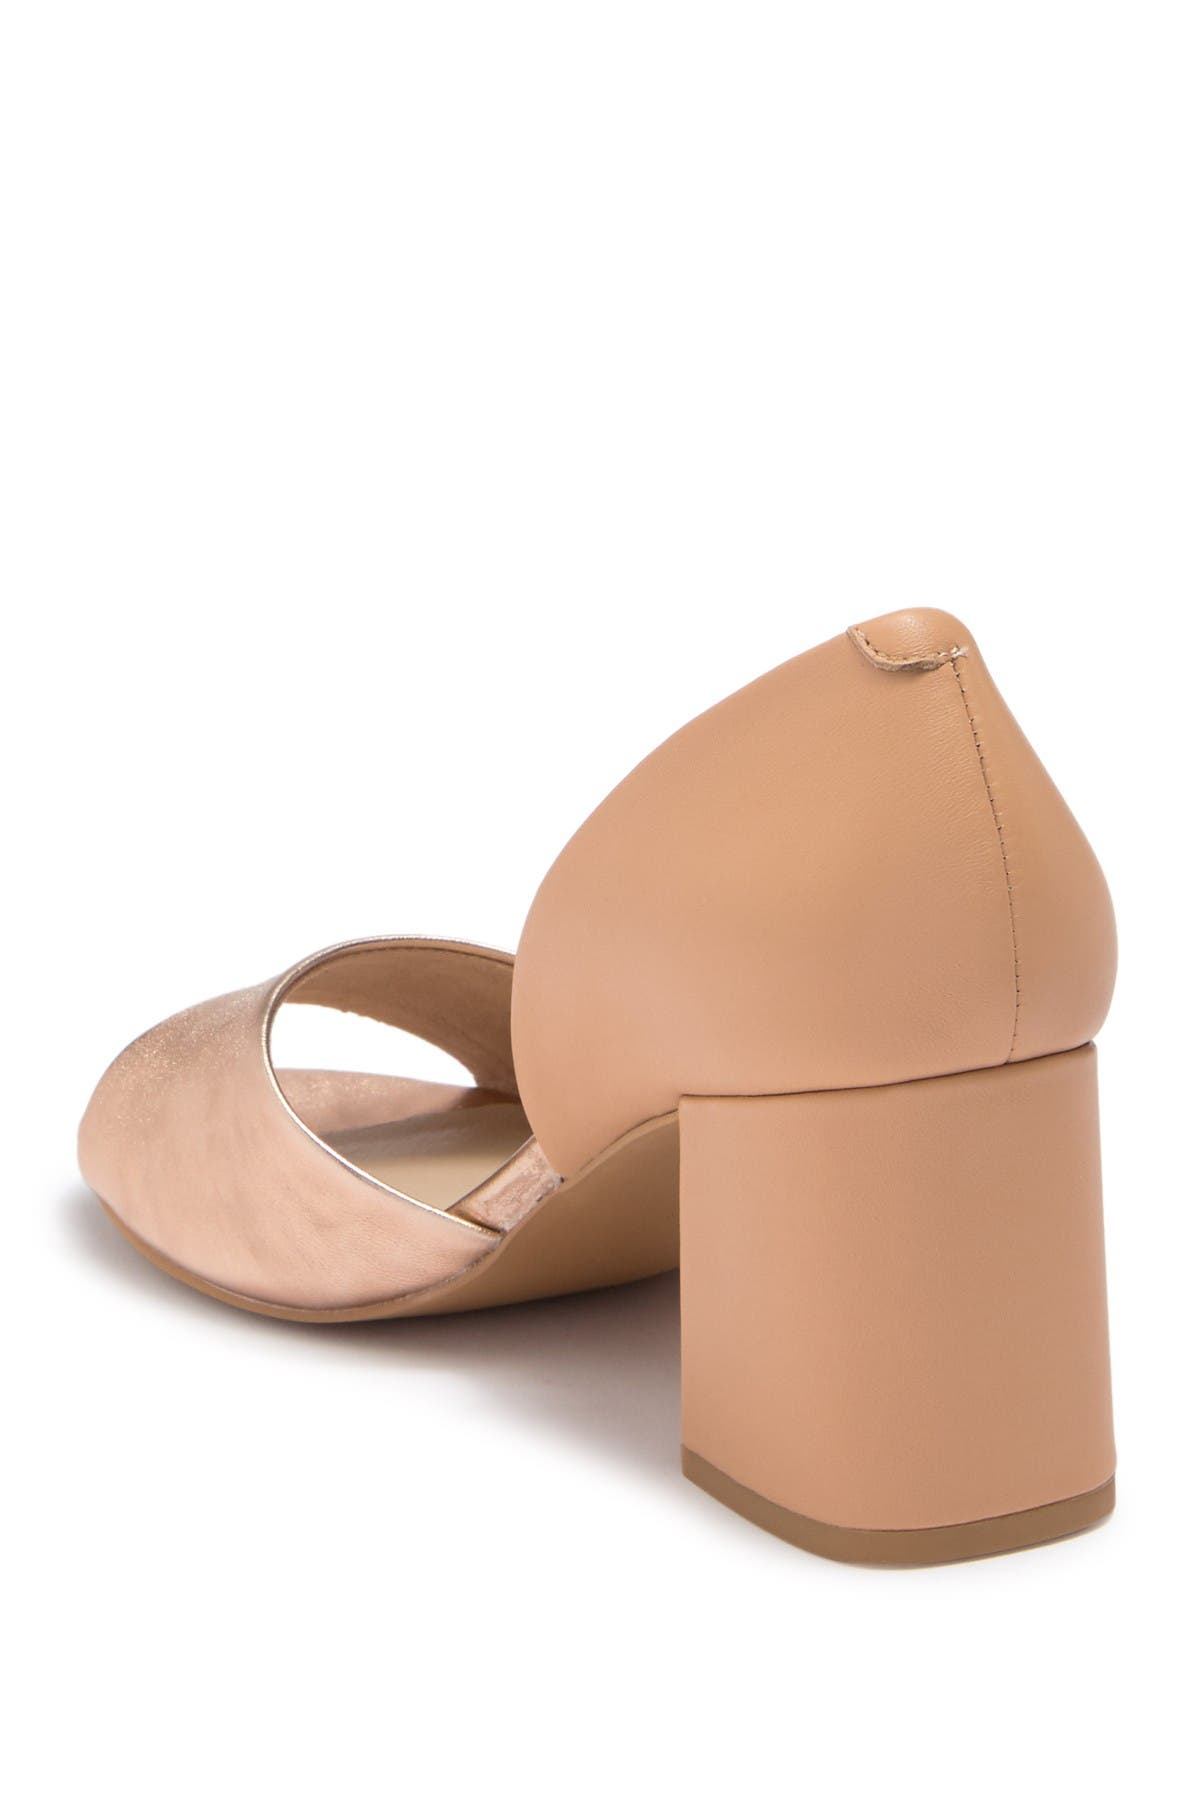 seychelles shabby chic heels